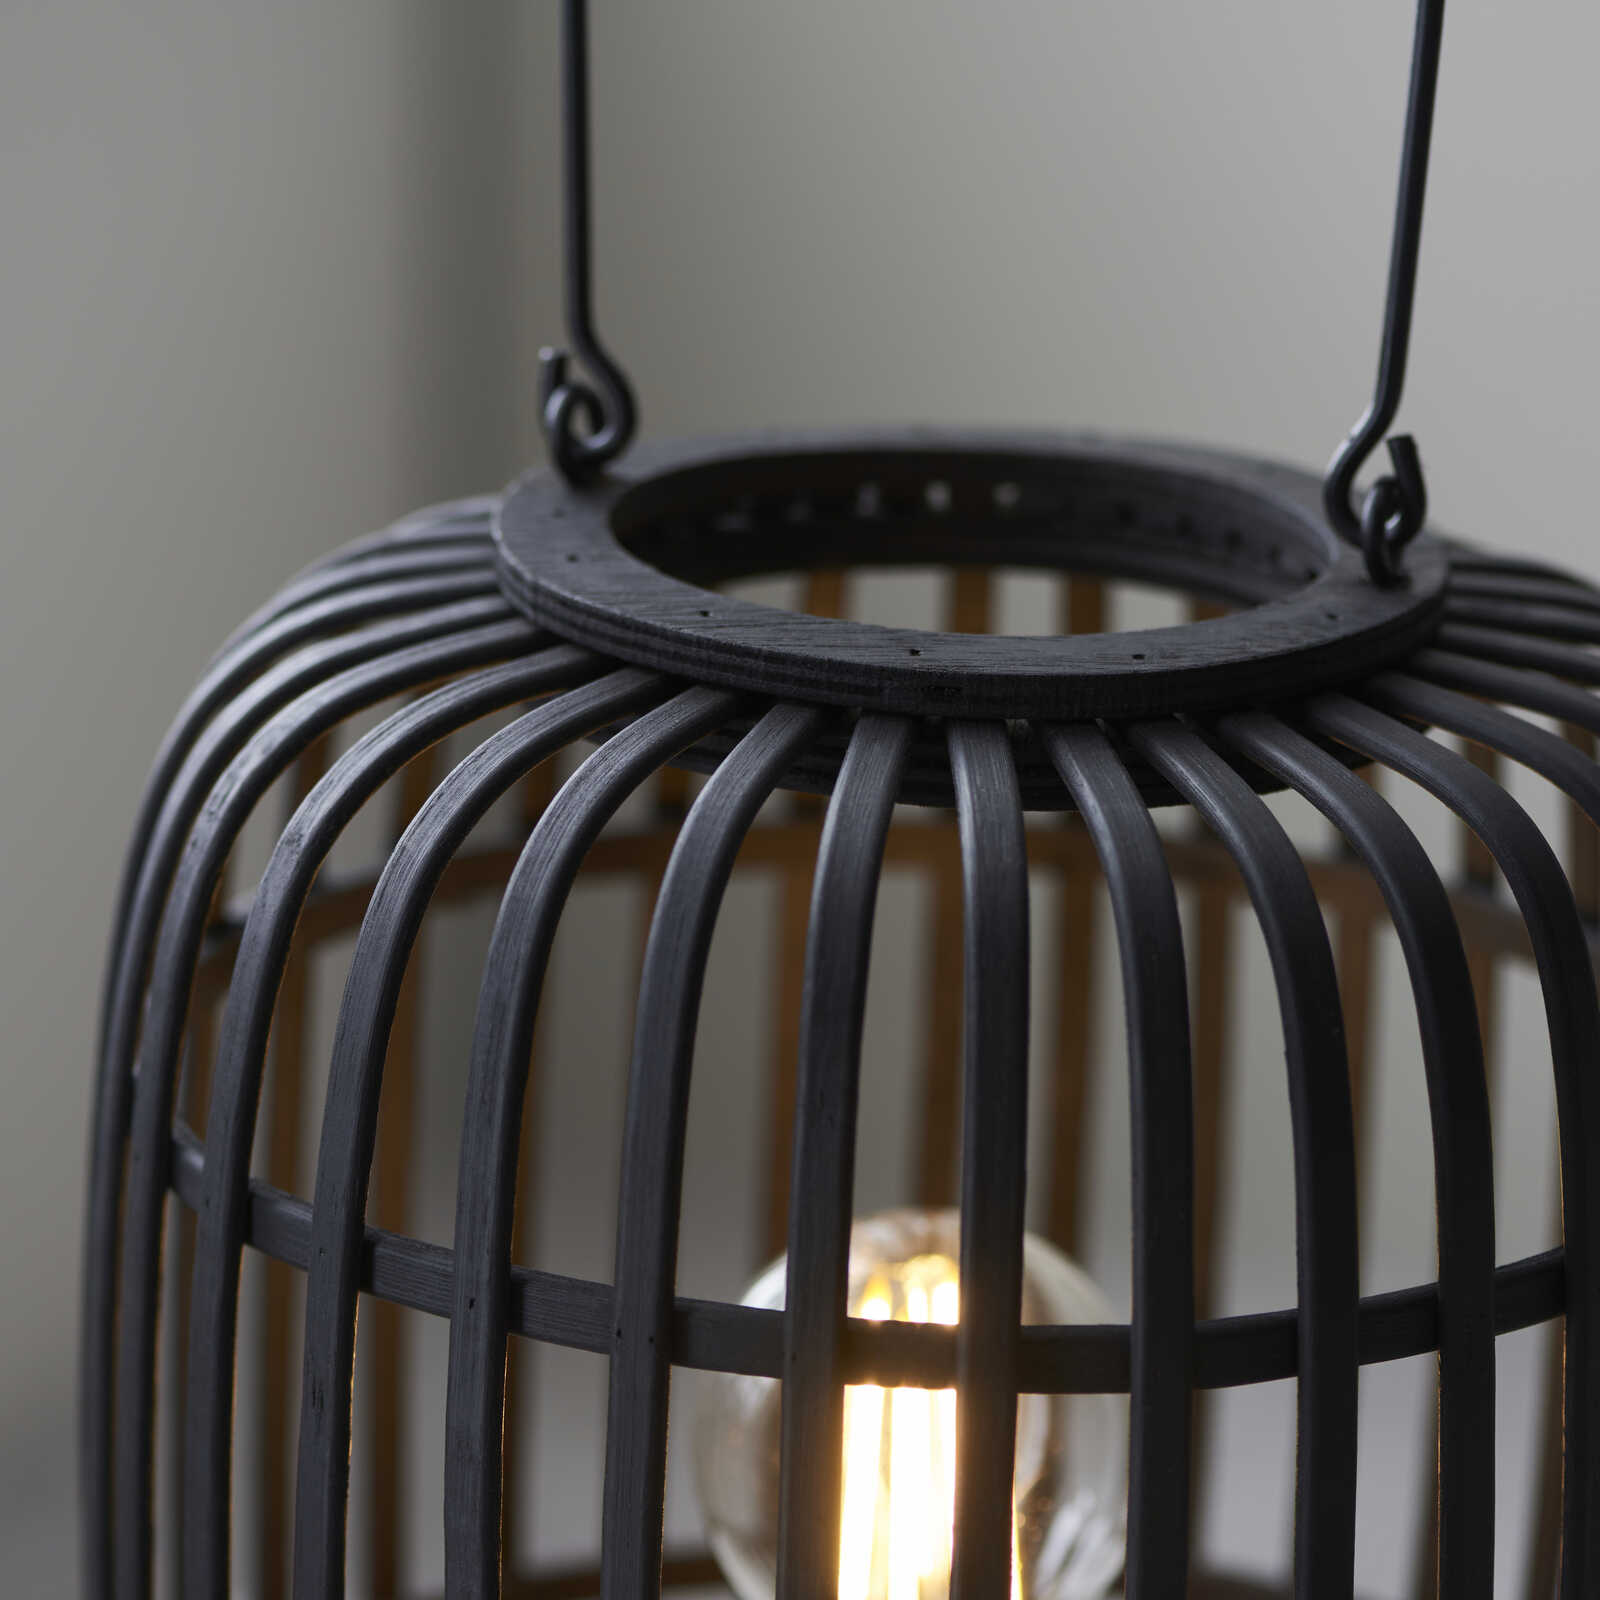             Lampe de table en métal - Willi 15 - Noir
        